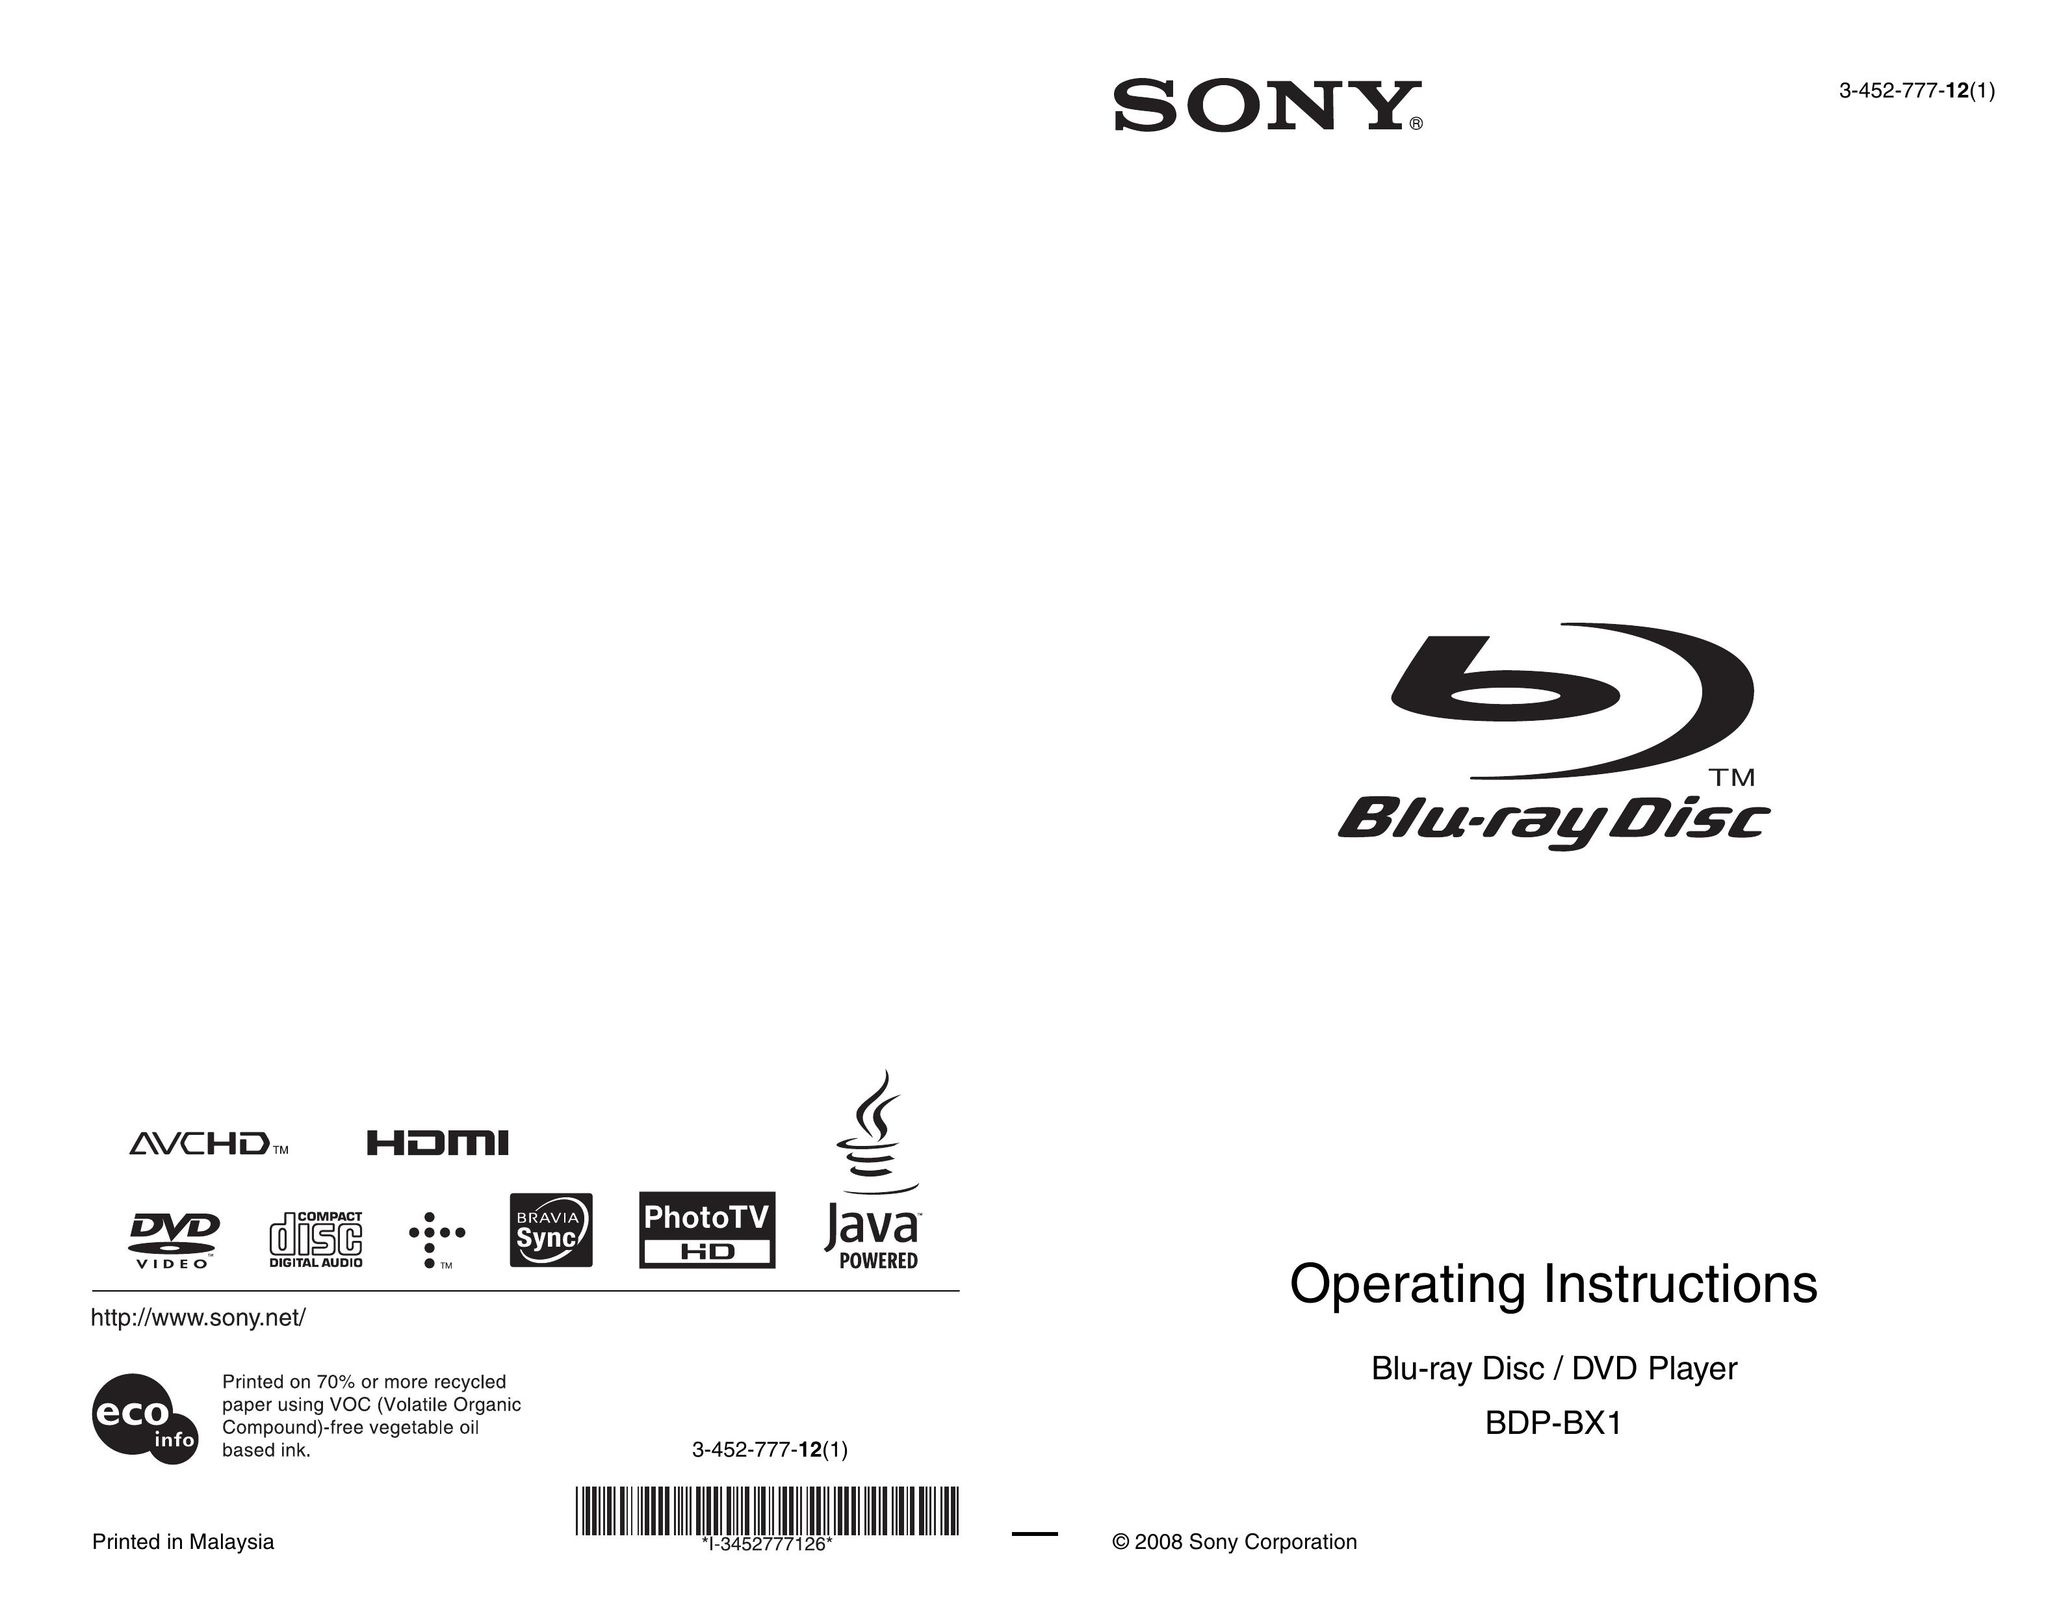 Sony BDP-BX1 DVD Player User Manual